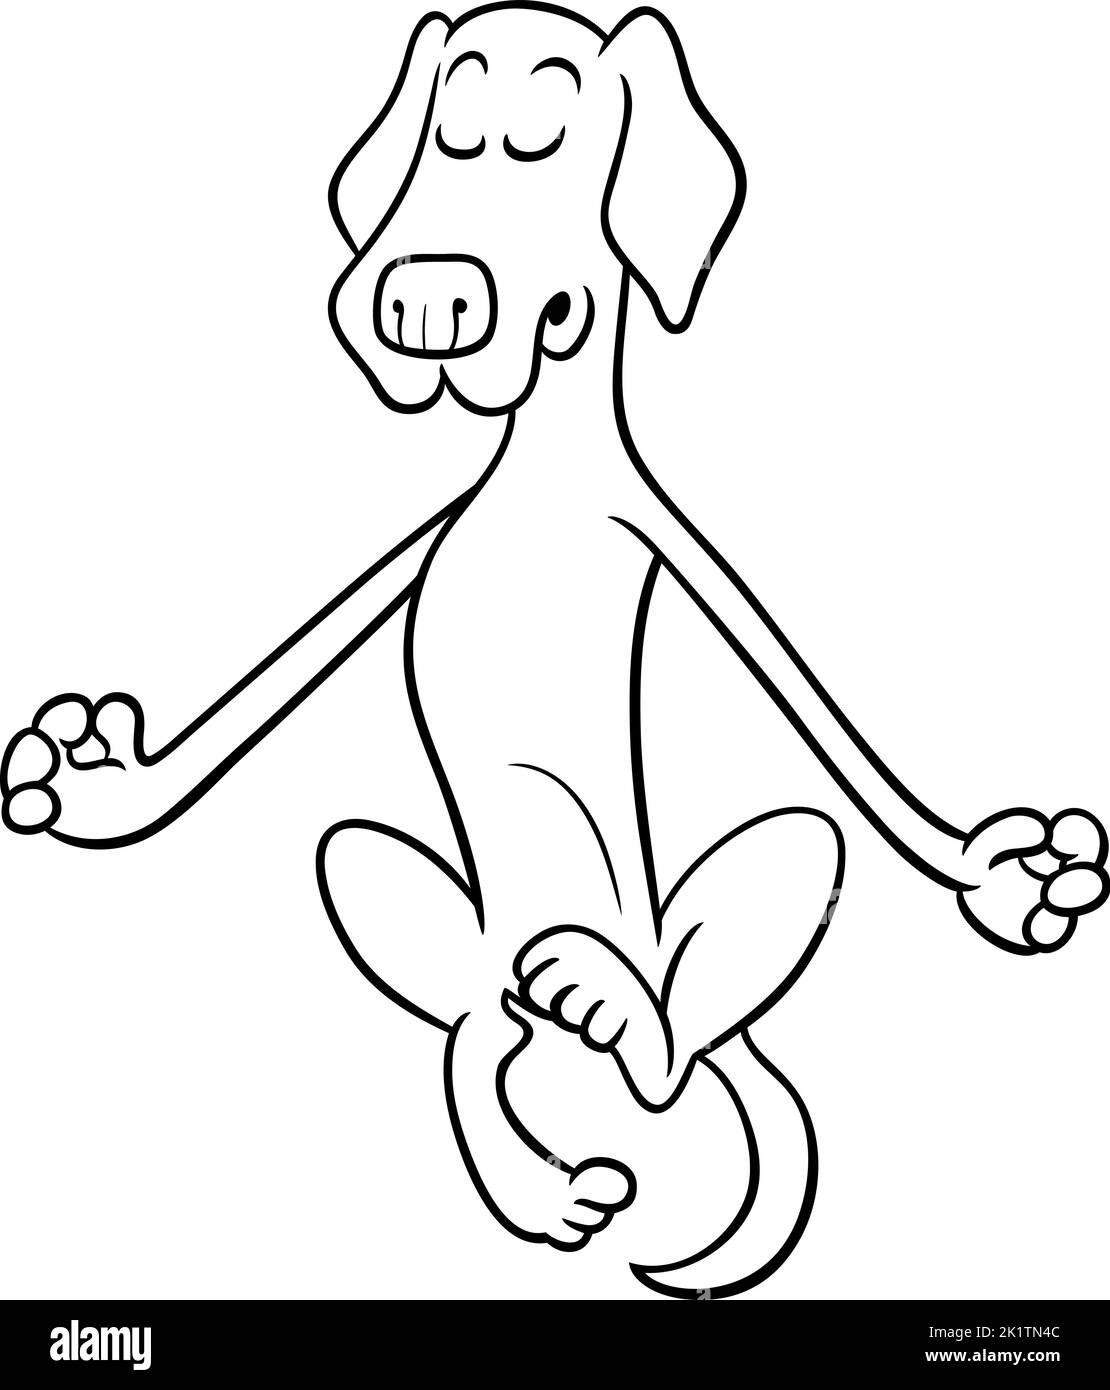 Dog ears cartoon Black and White Stock Photos & Images - Alamy